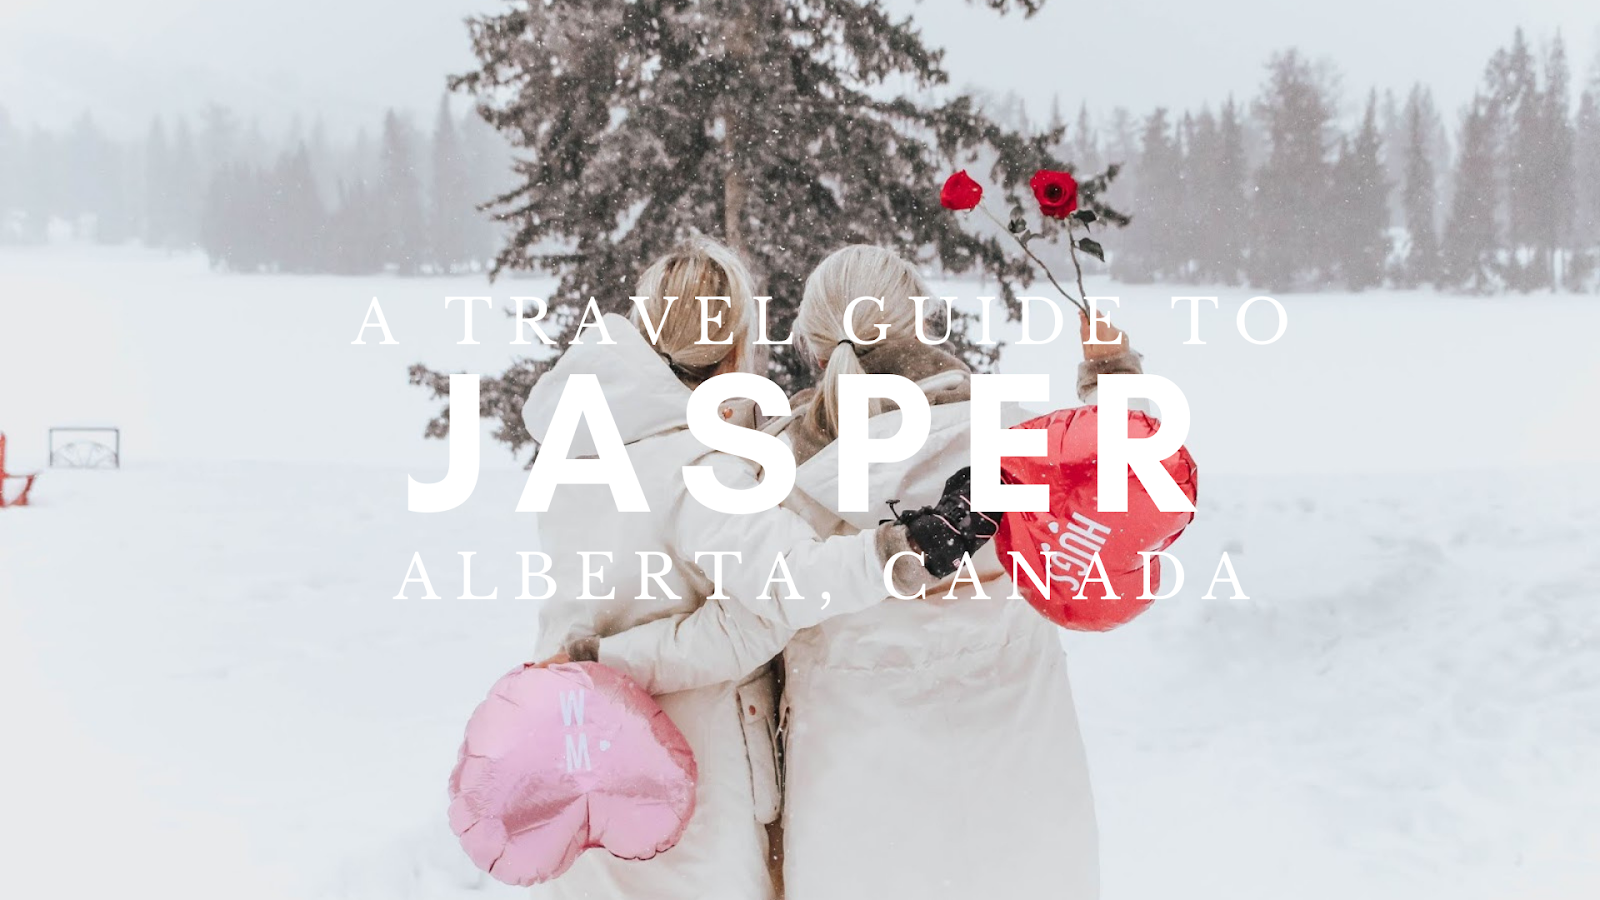 Travel Guide to Jasper, Alberta, Canada